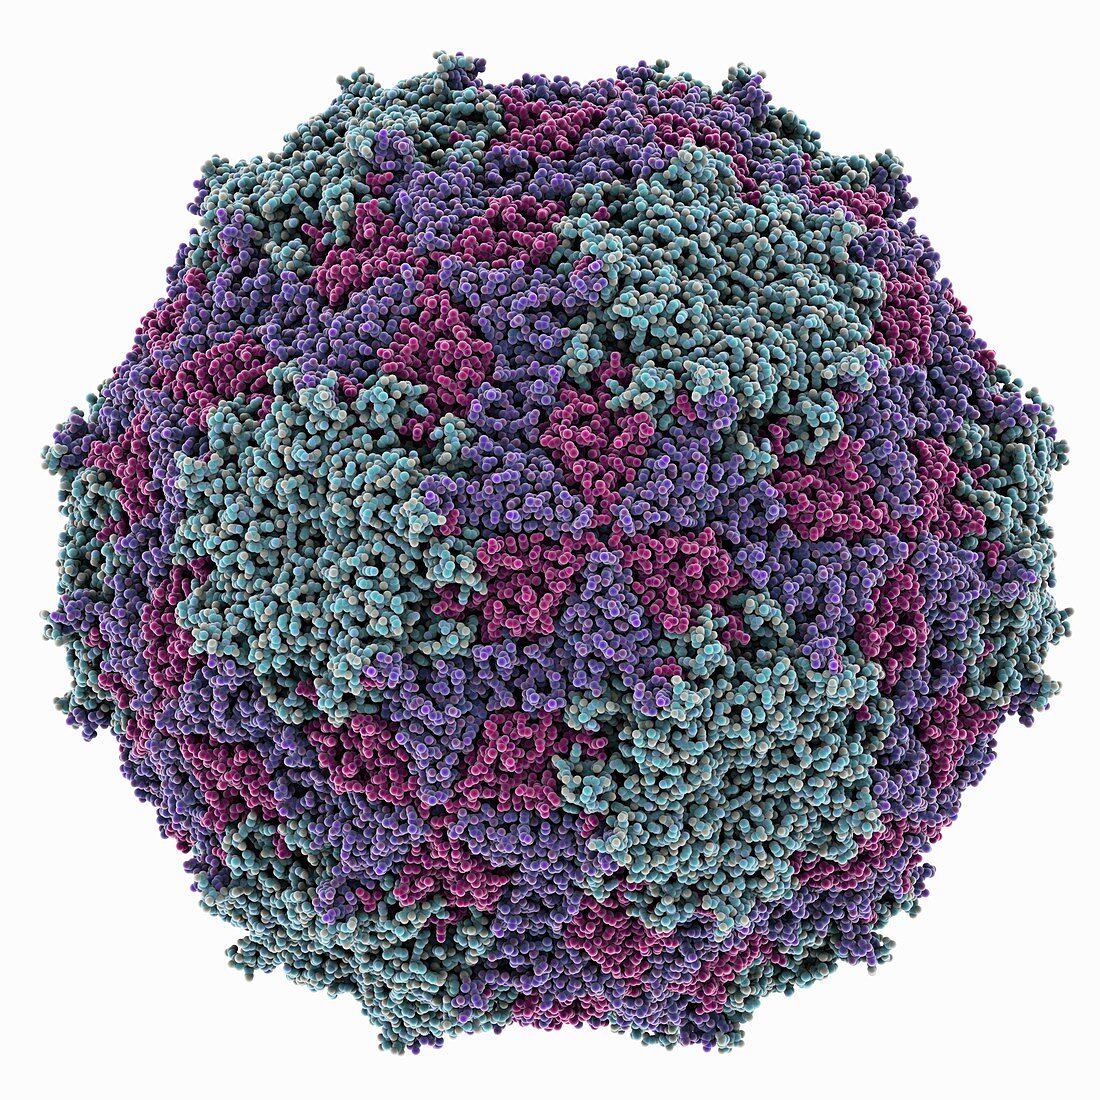 Mengovirus capsid,molecular model